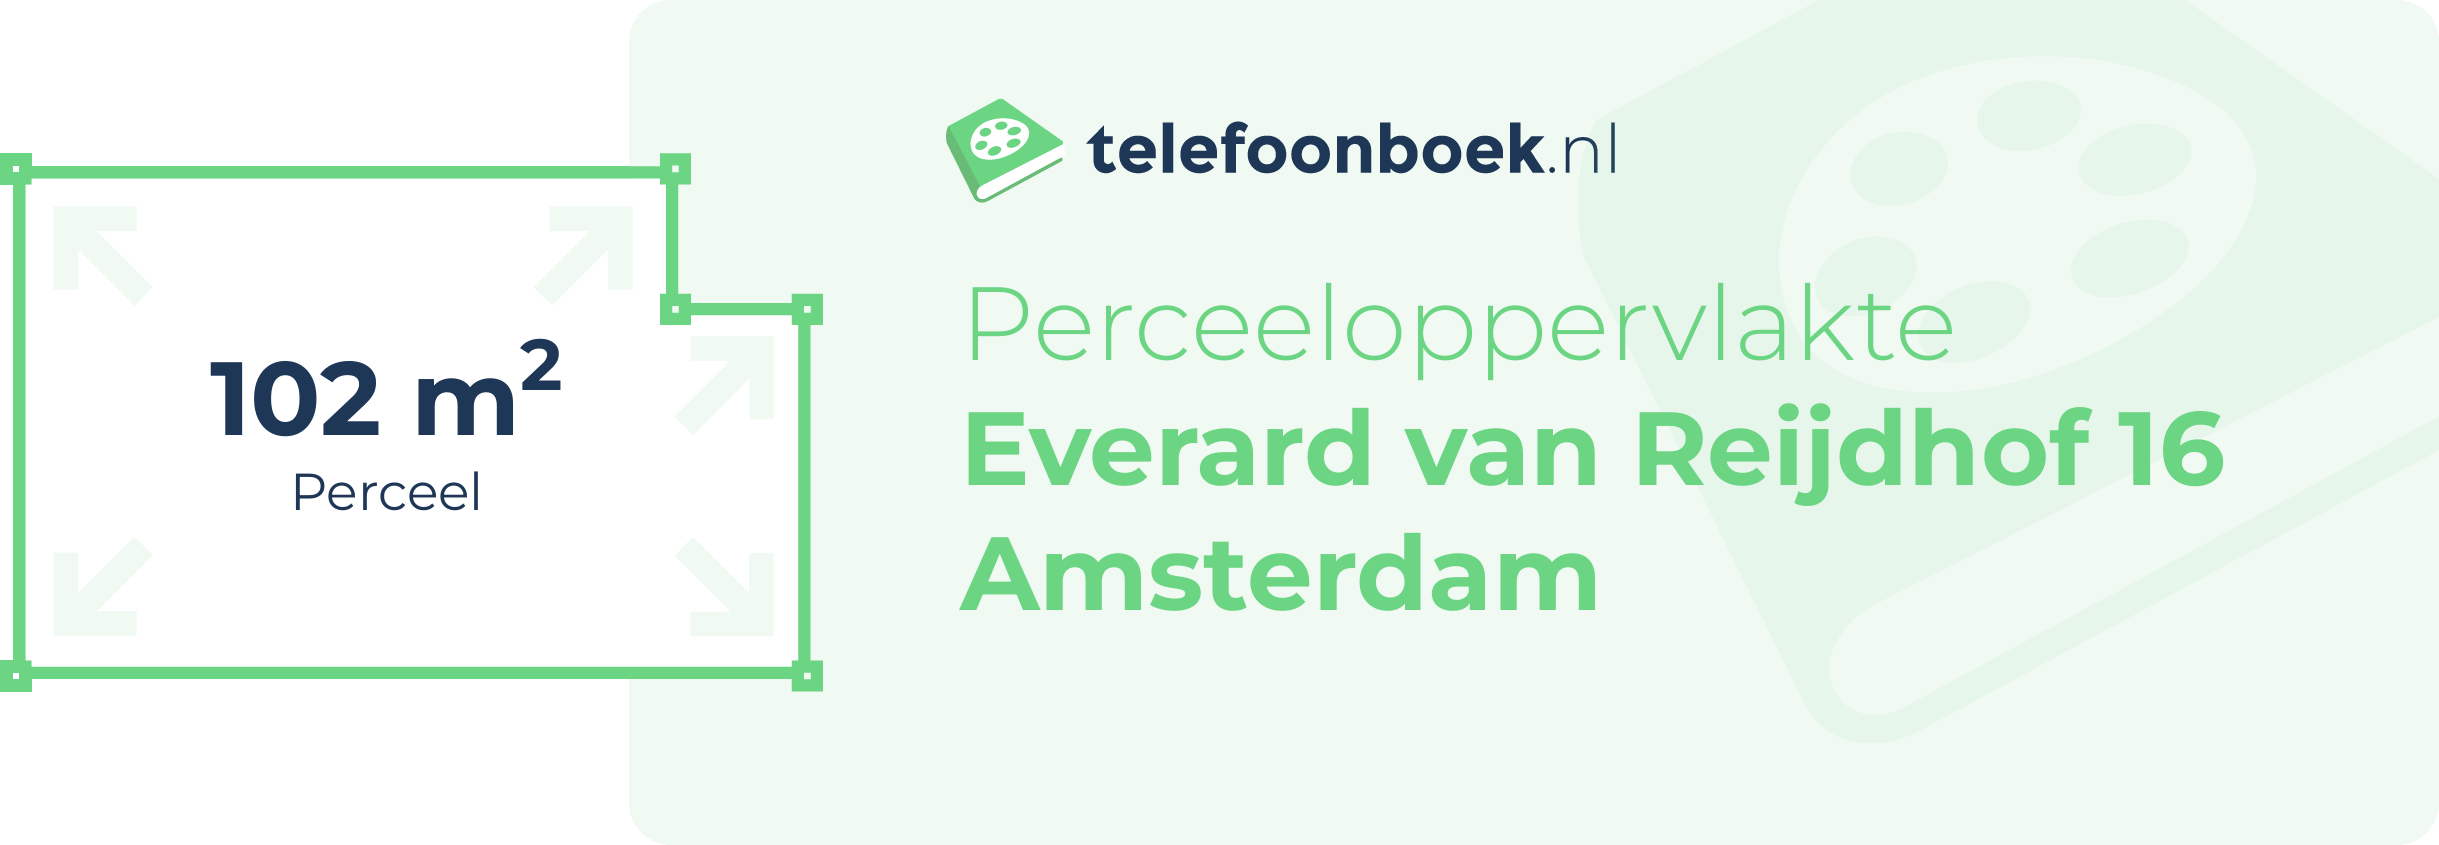 Perceeloppervlakte Everard Van Reijdhof 16 Amsterdam